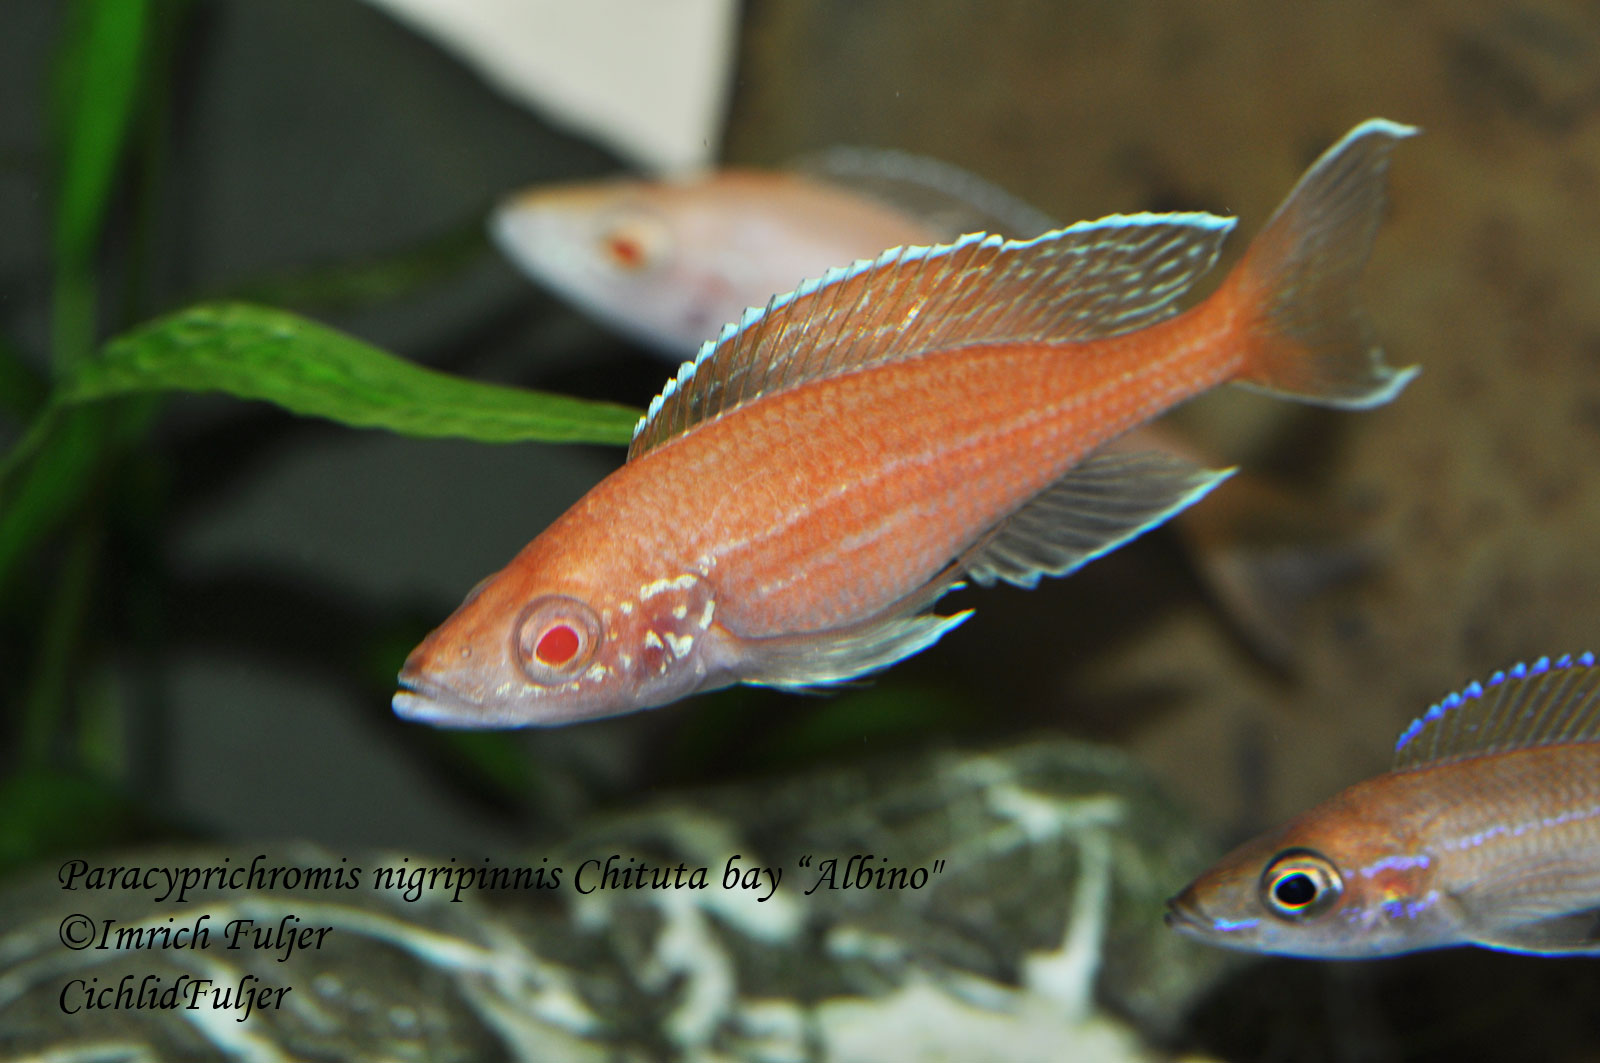 Paracyprichromis nigripinnis Chituta bay “Albino